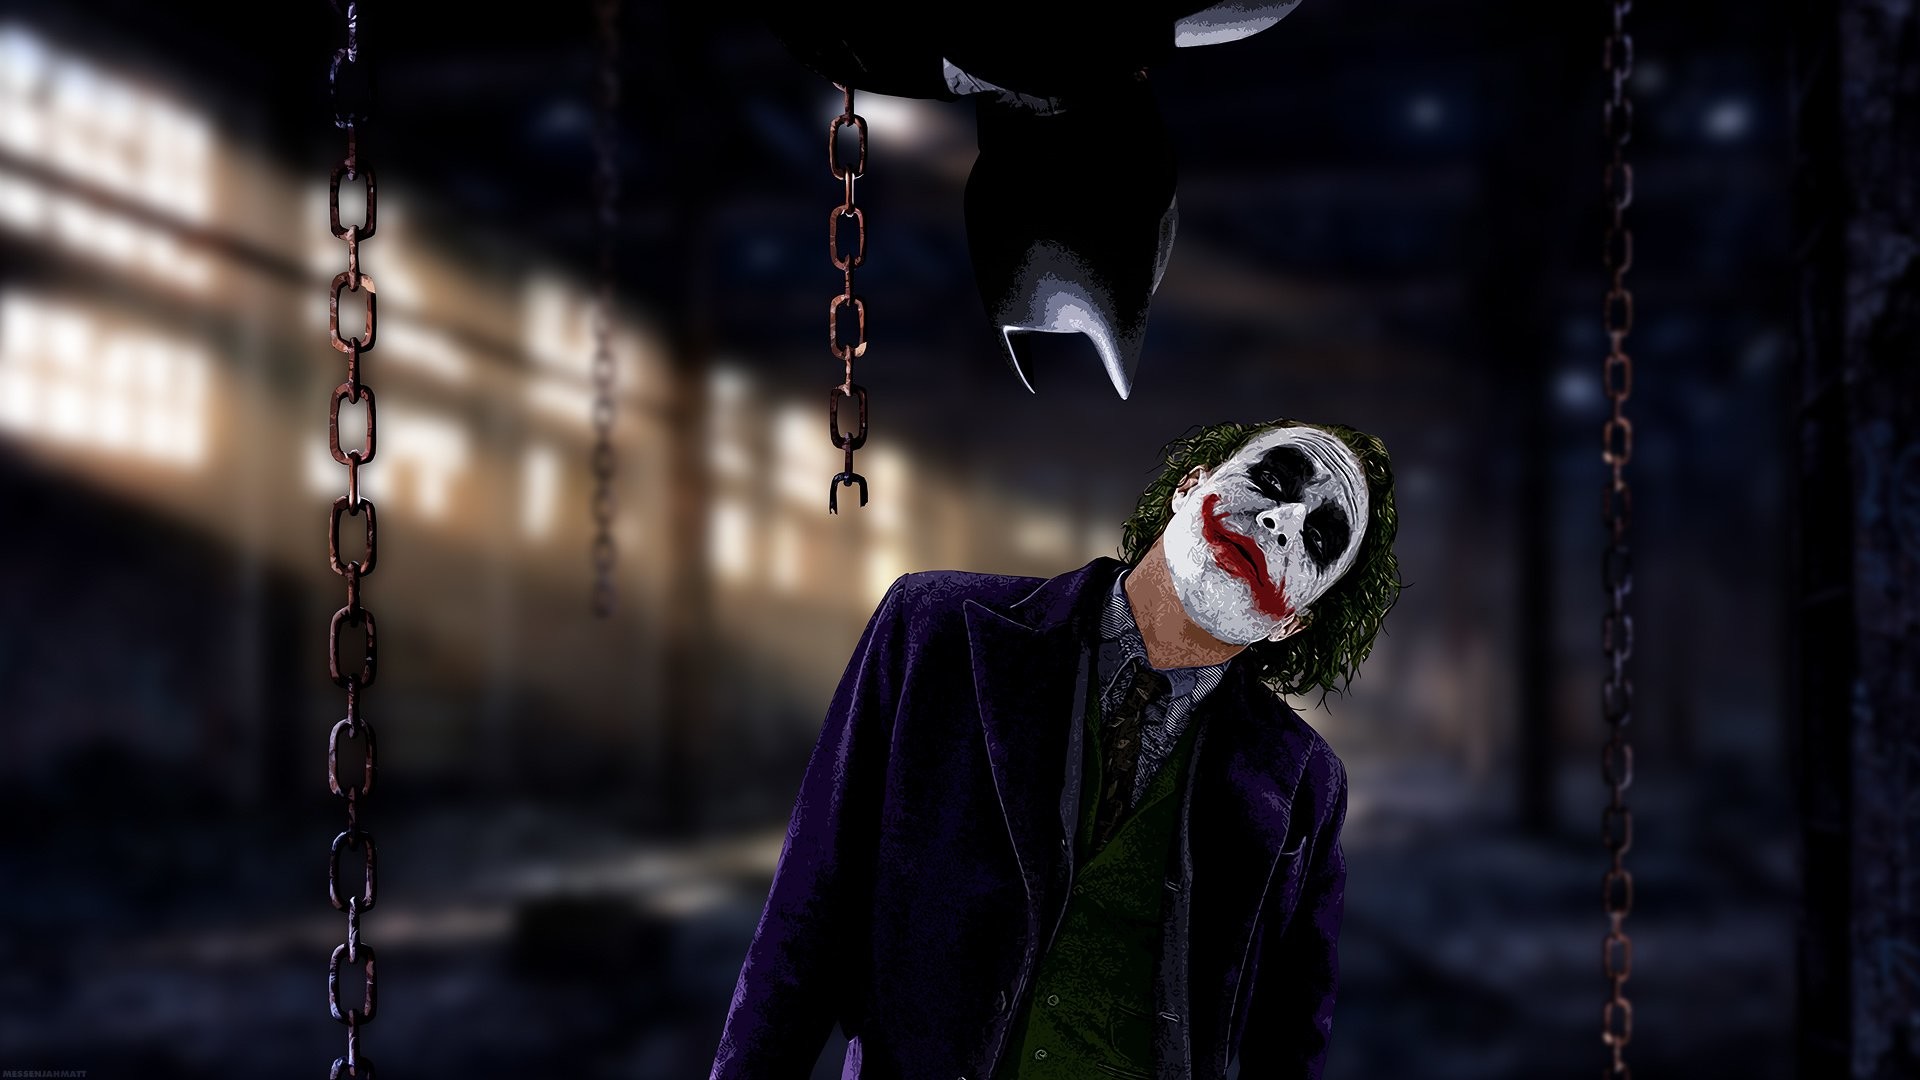 710 Koleksi Gambar Keren Joker Hd HD Terbaik